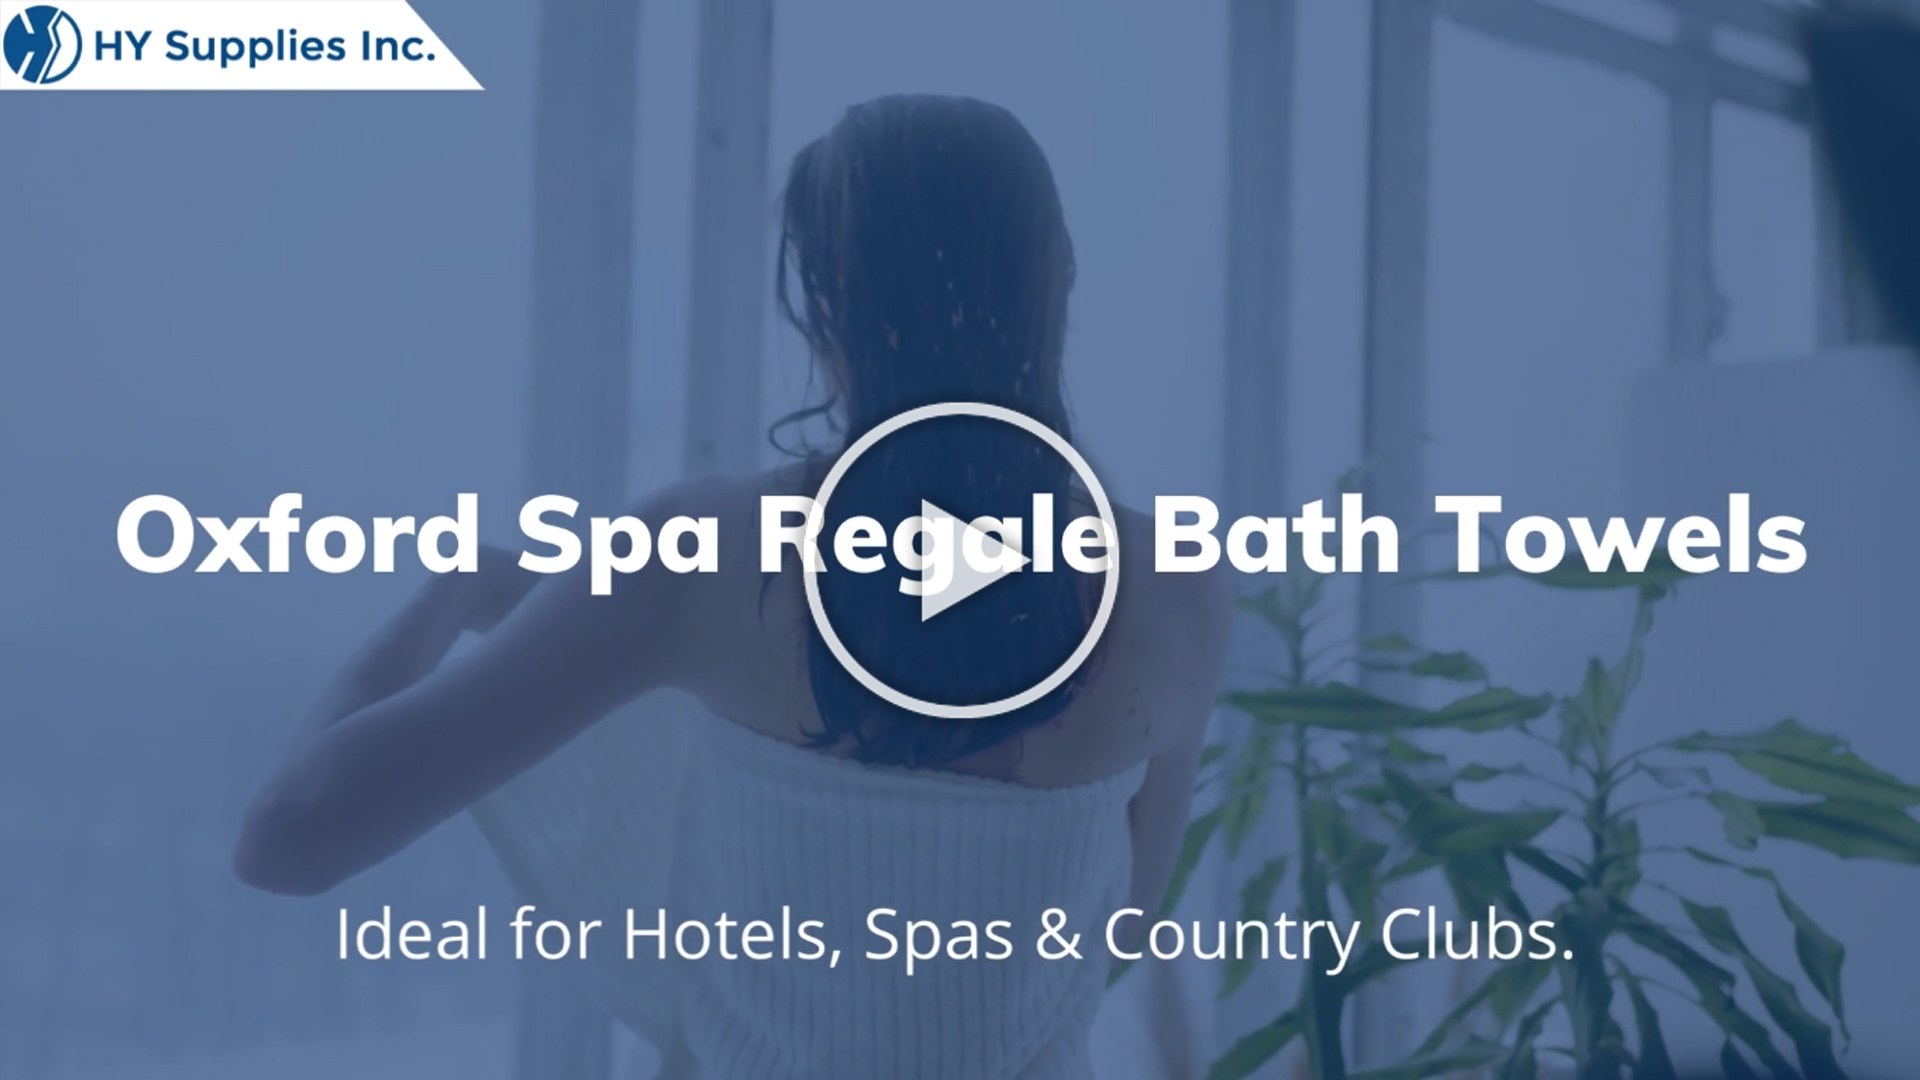 Oxford Spa Regale Bath Towels